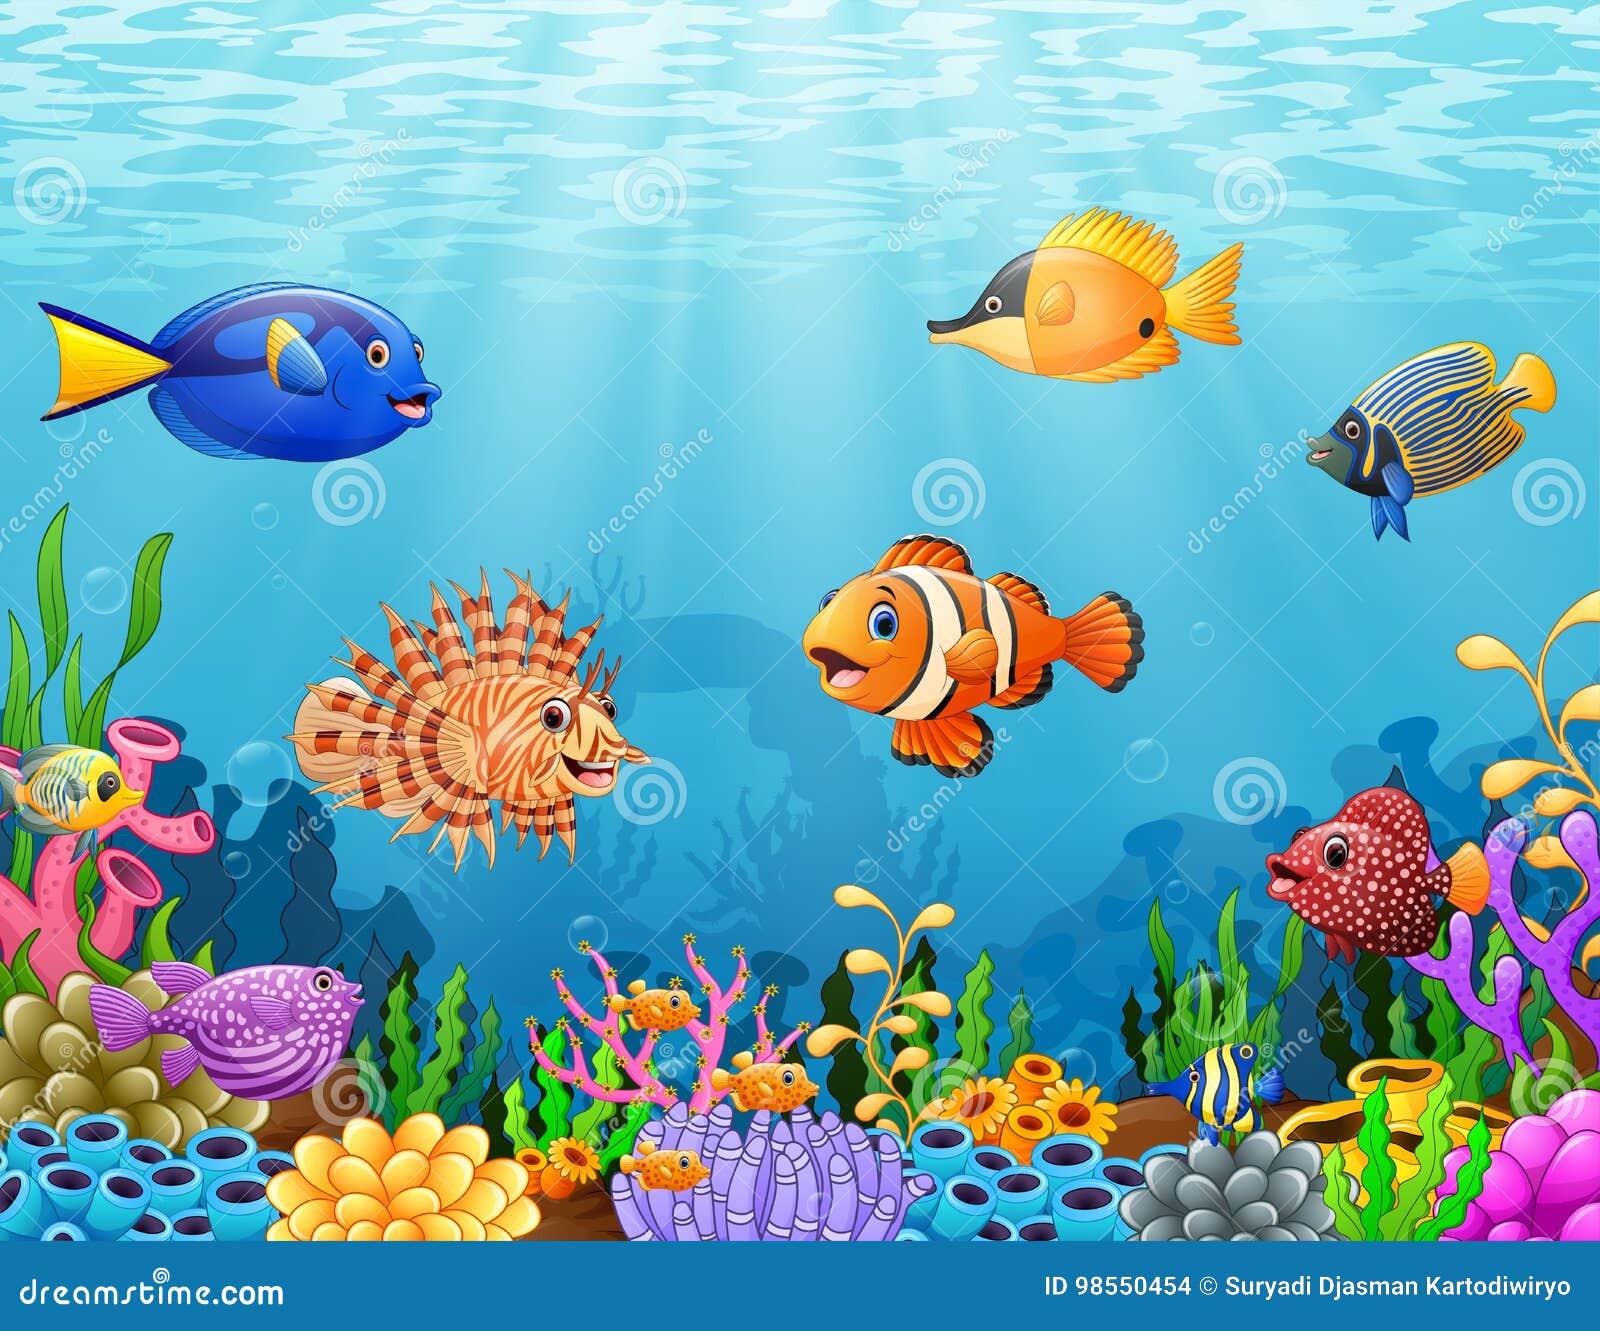 Cartoon fish under the sea stock vector. Illustration of coral - 98550454